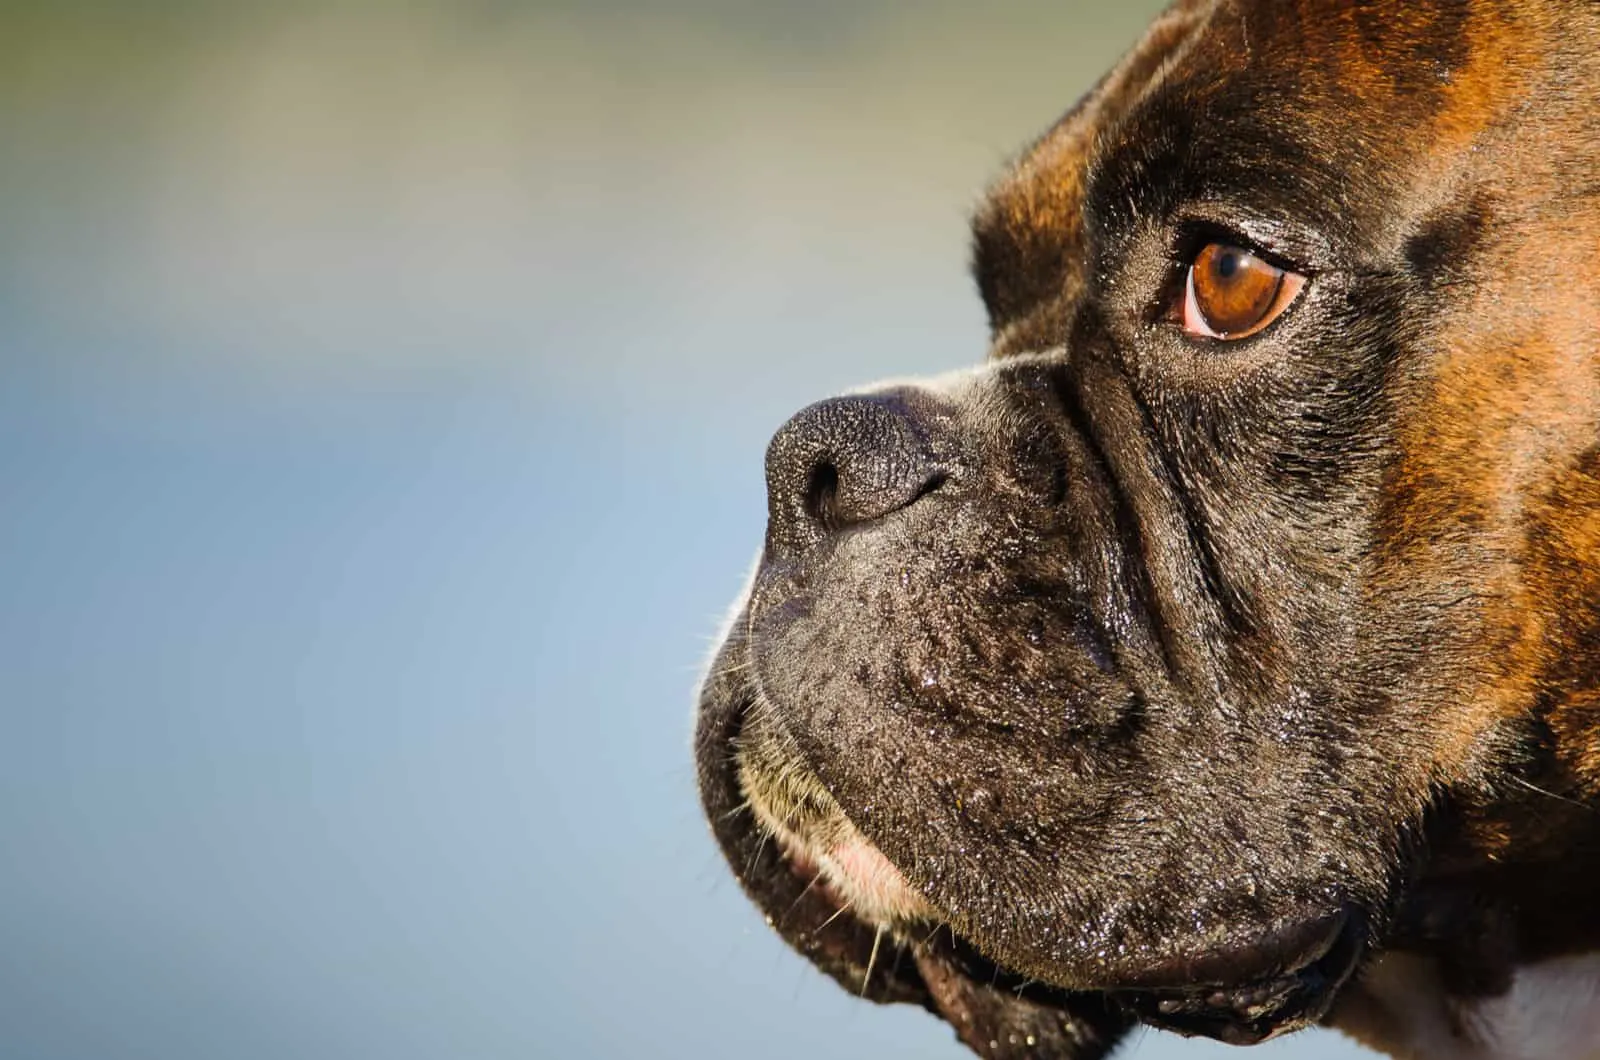 close-up photograph of a boxer dog's face